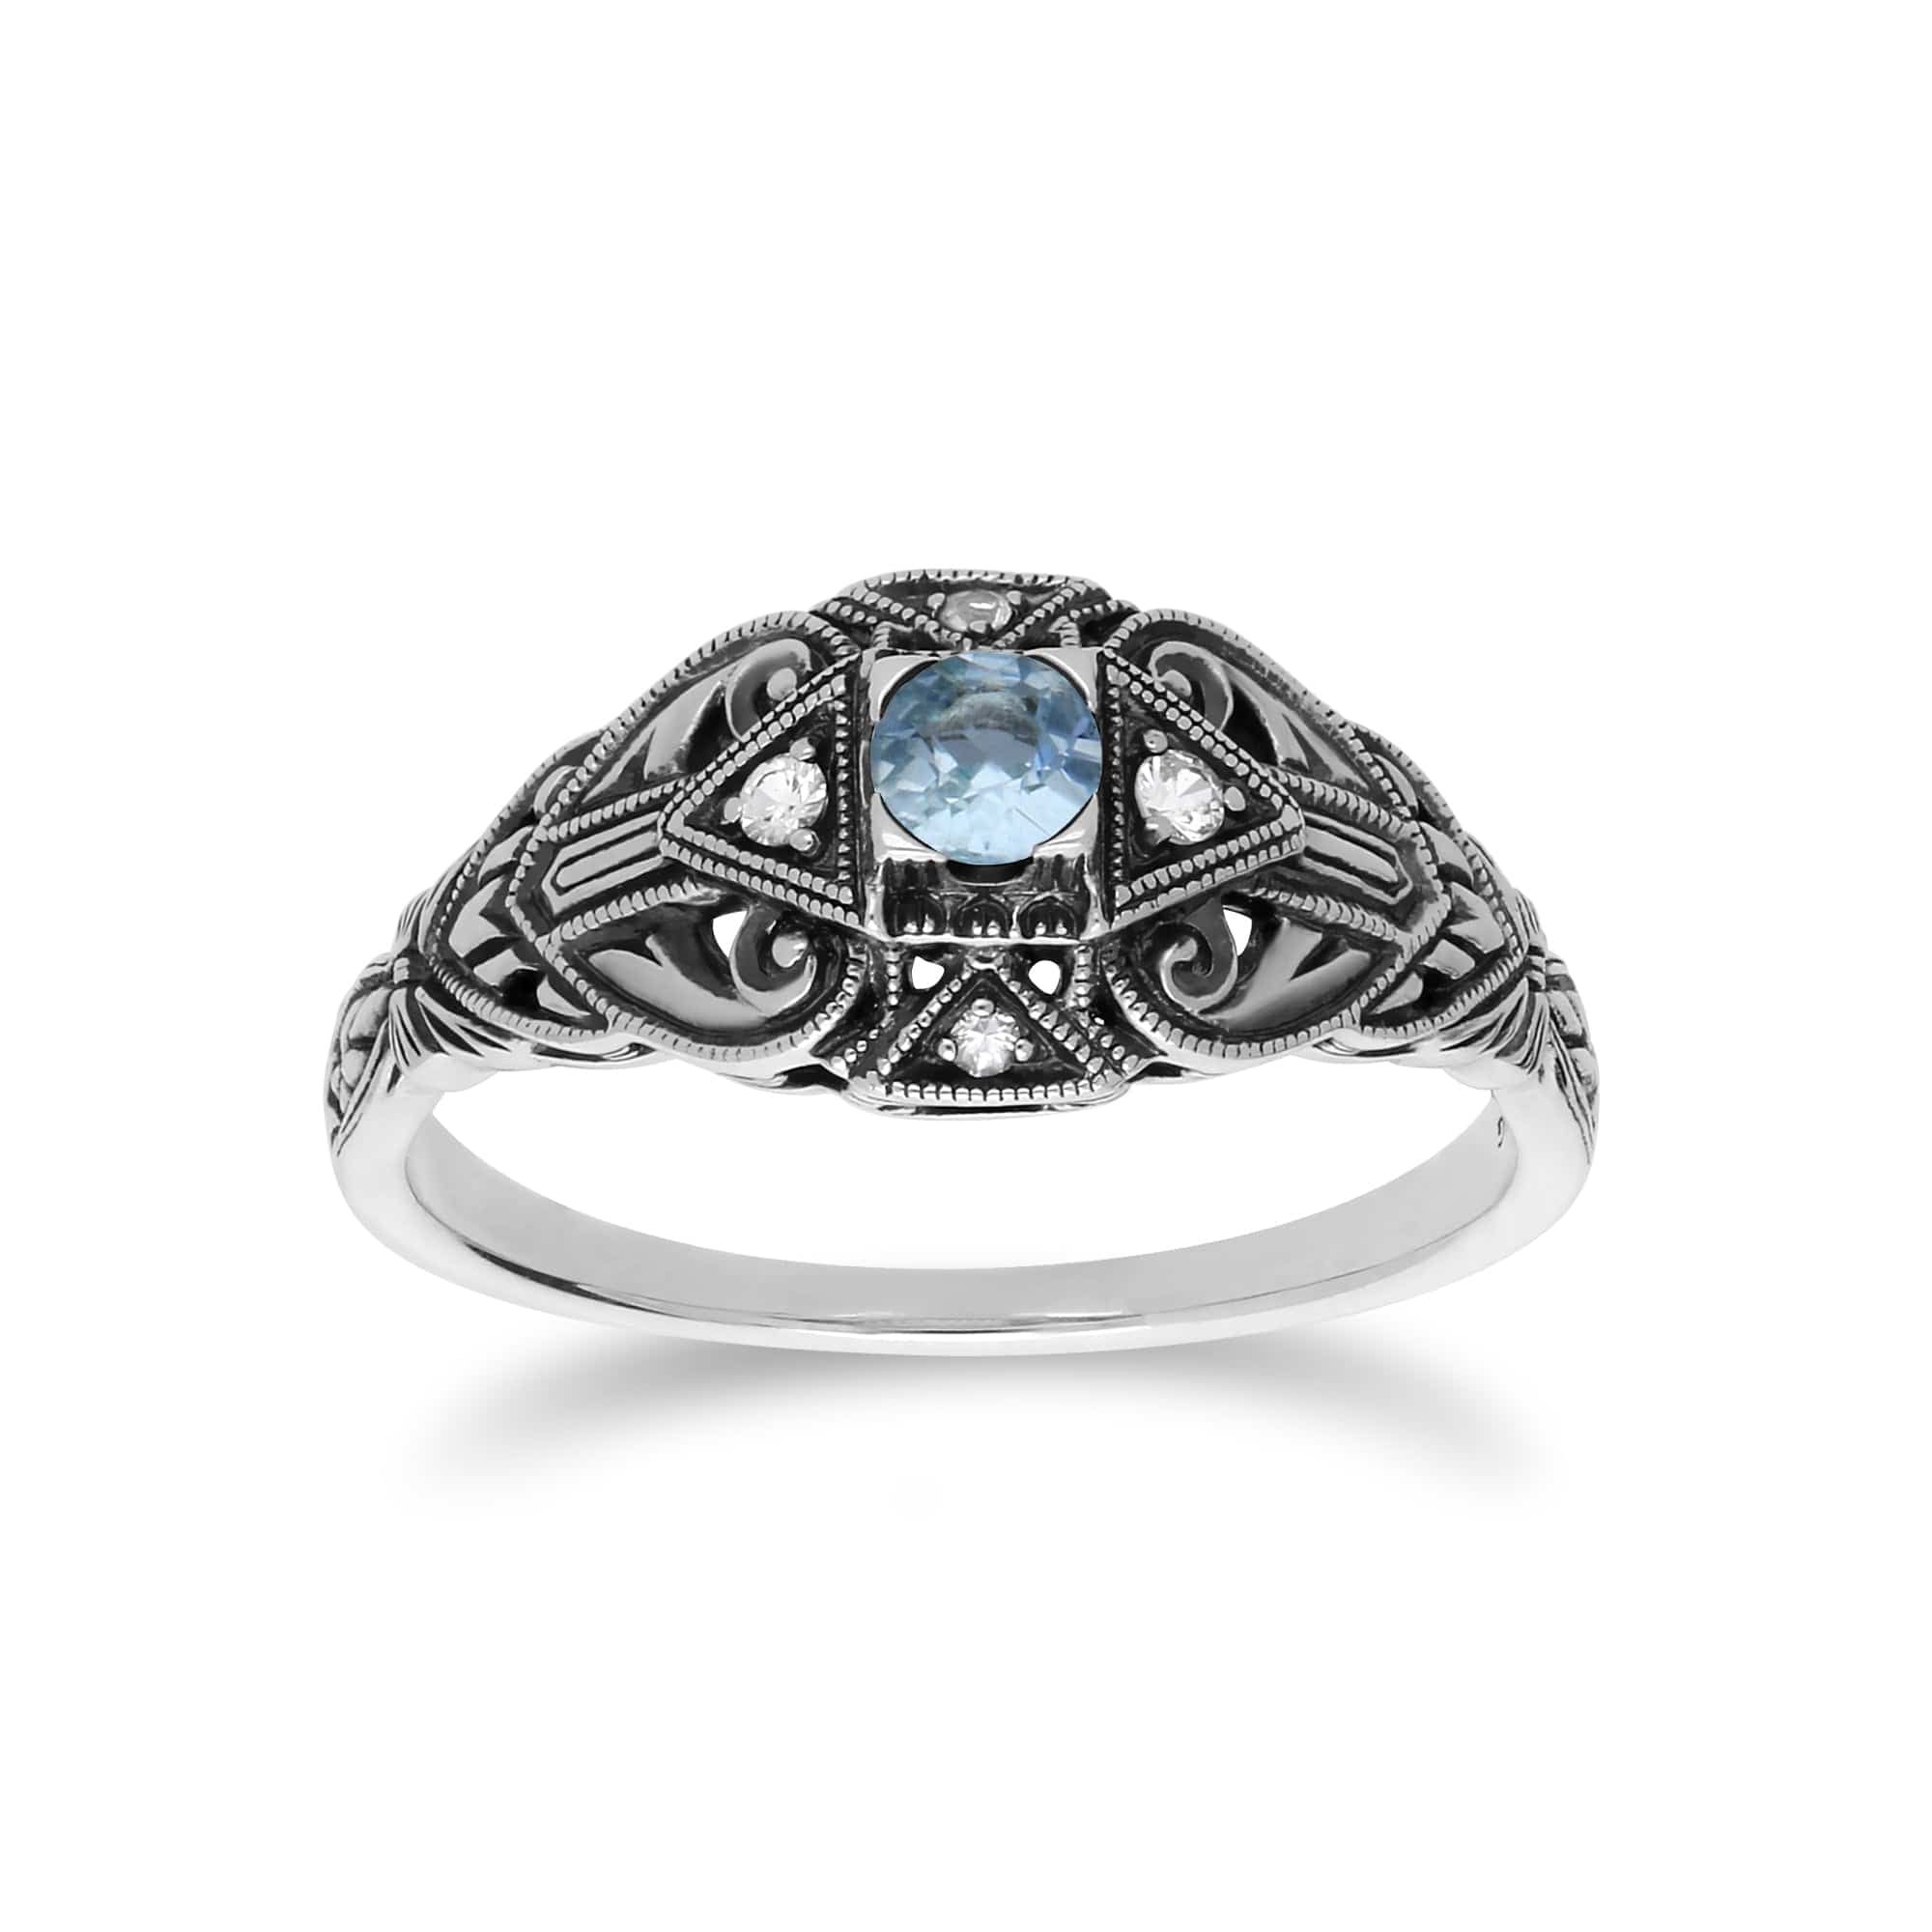 Art Deco Style Round Blue Topaz & White Topaz  Ring in 925 Sterling Silver - Gemondo